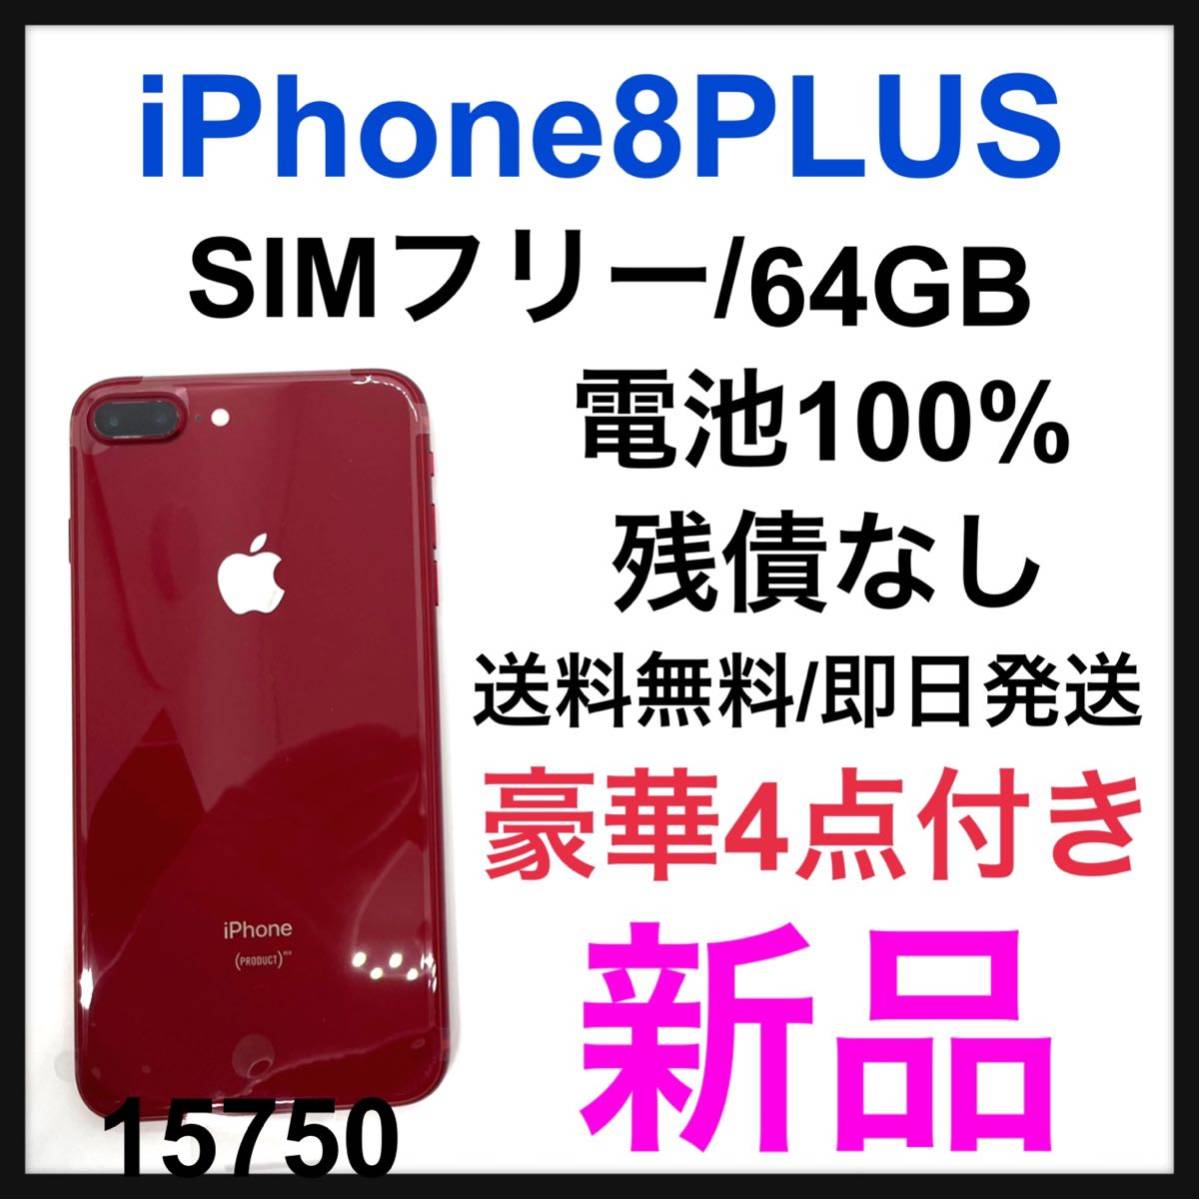 iPhone8 Plus 256GB RED SIMフリー | myglobaltax.com